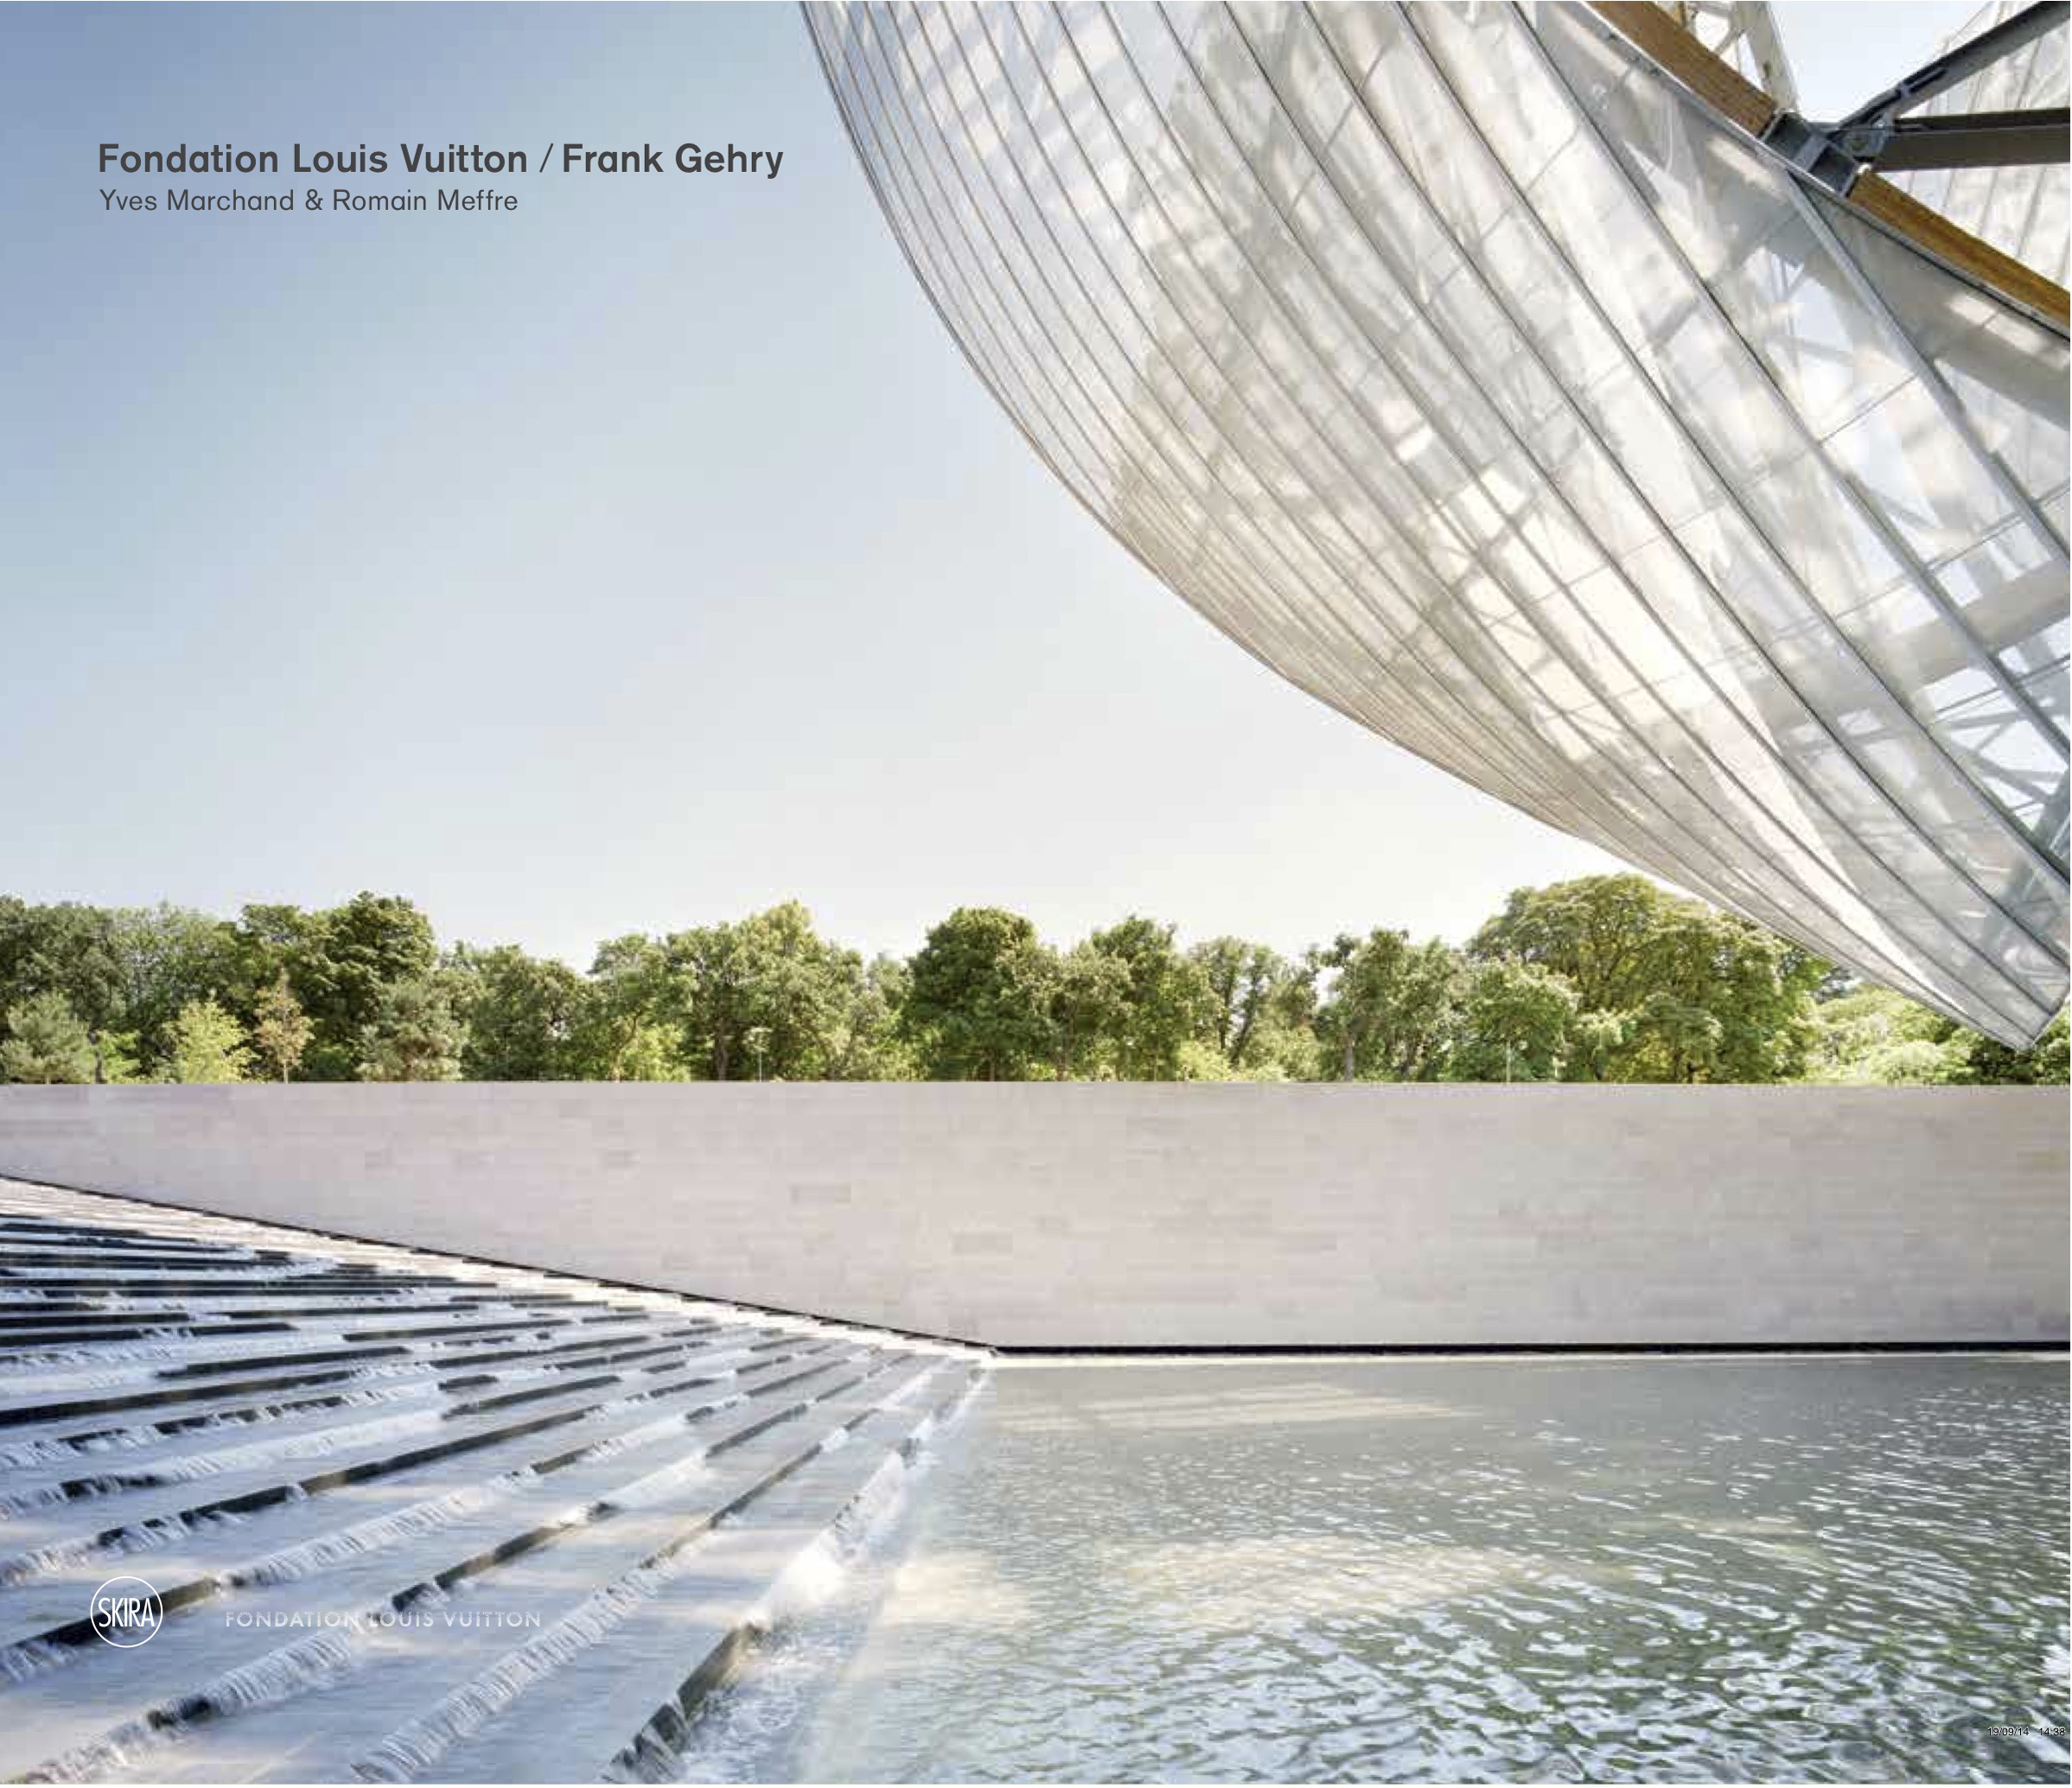 Fondation Louis Vuitton / Frank Gehry